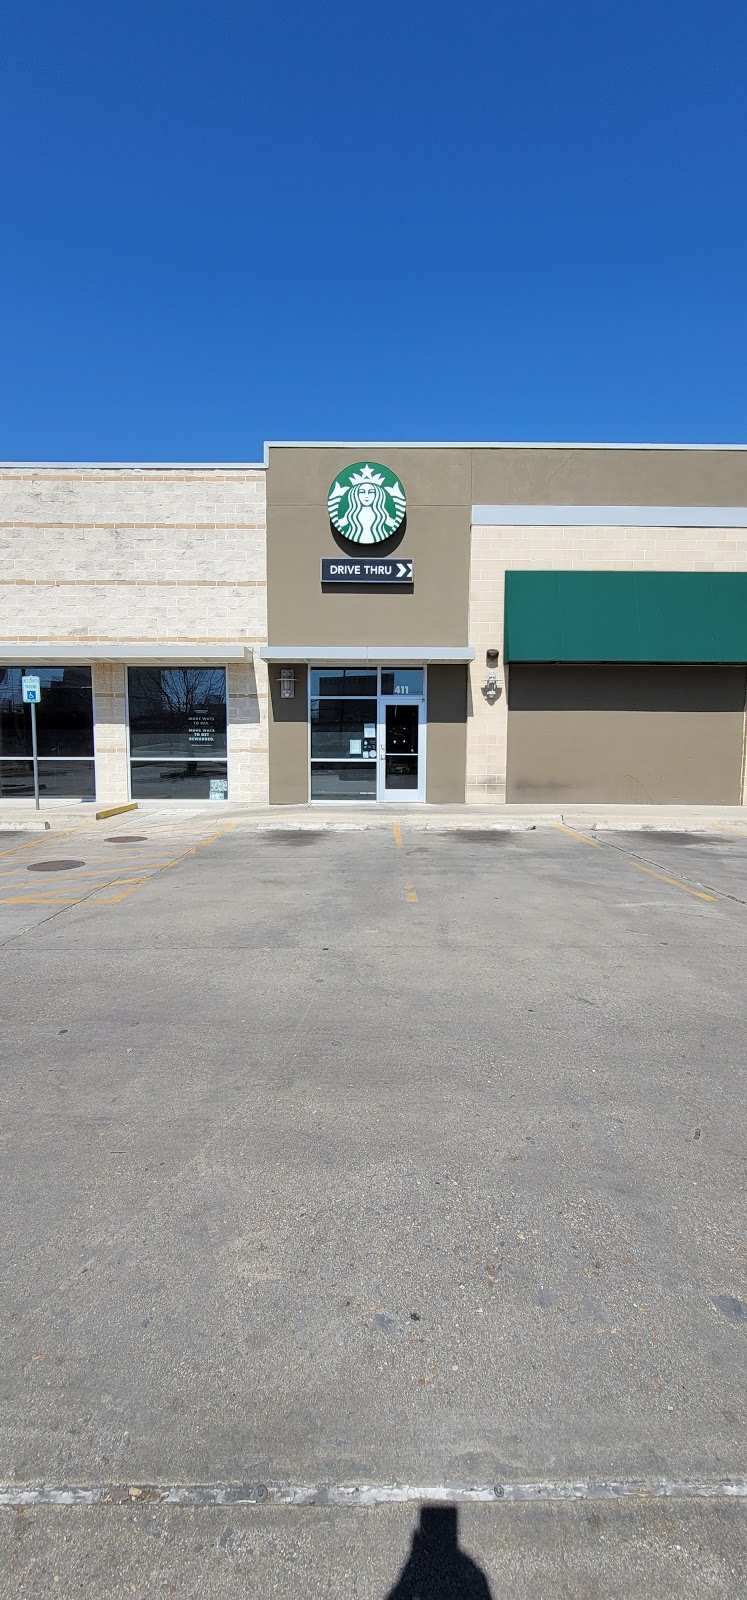 Starbucks | cafe | 411 E Quincy St, San Antonio, TX 78215, USA | 2102239958 OR +1 210-223-9958